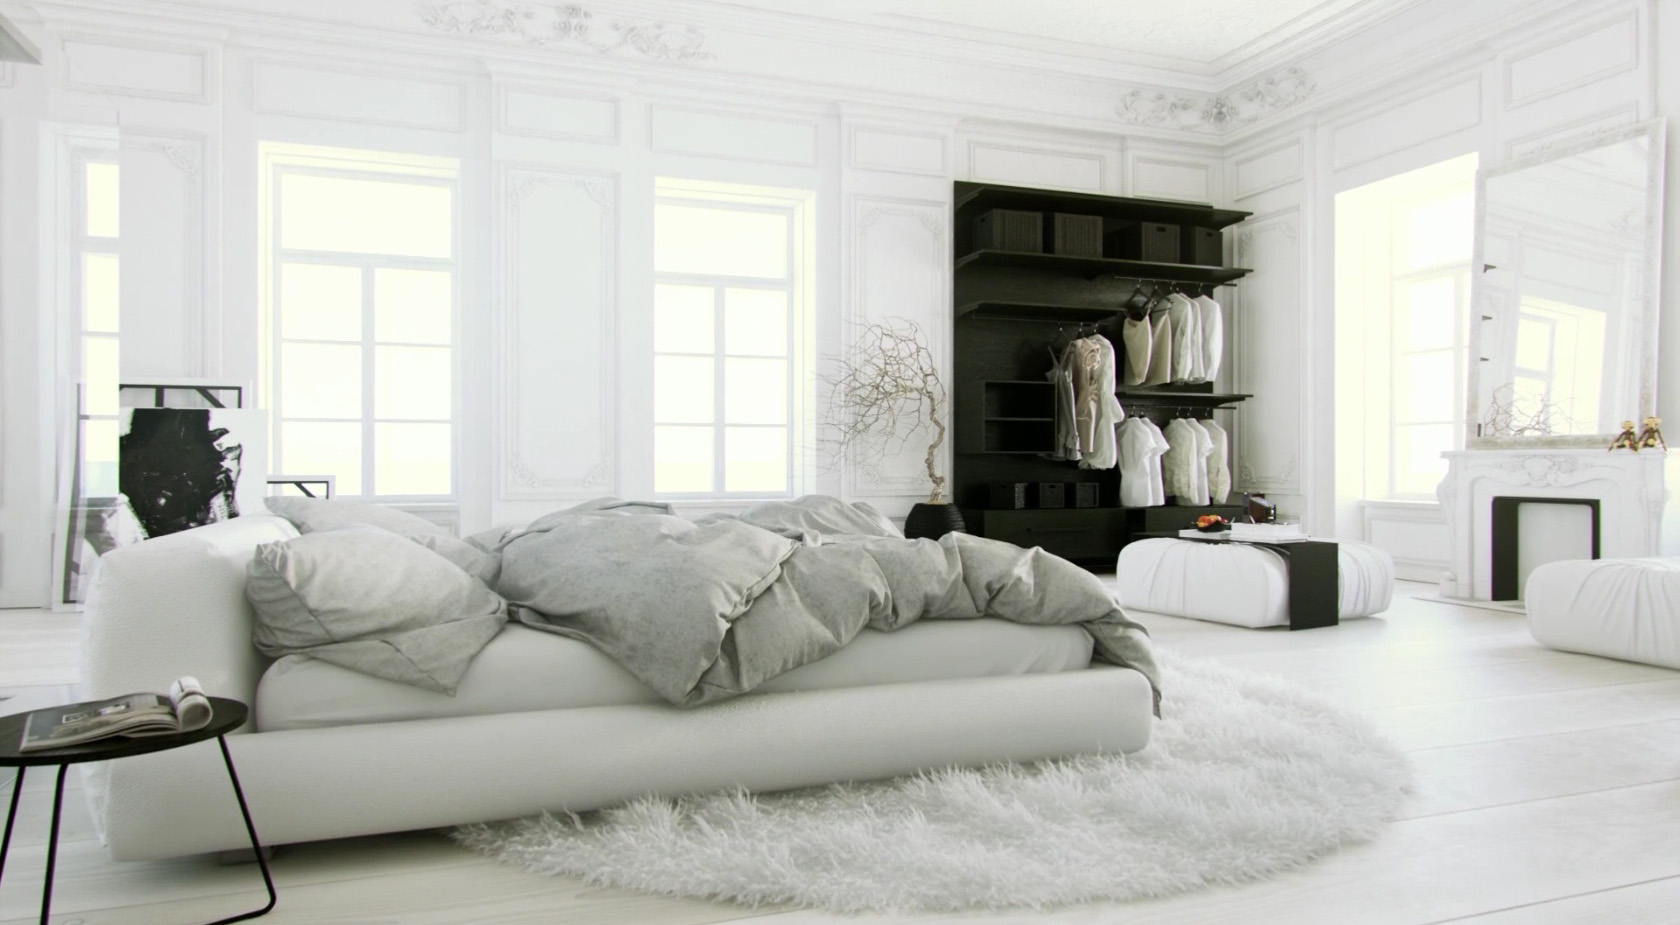 All-White Bedroom Design Ideas 3